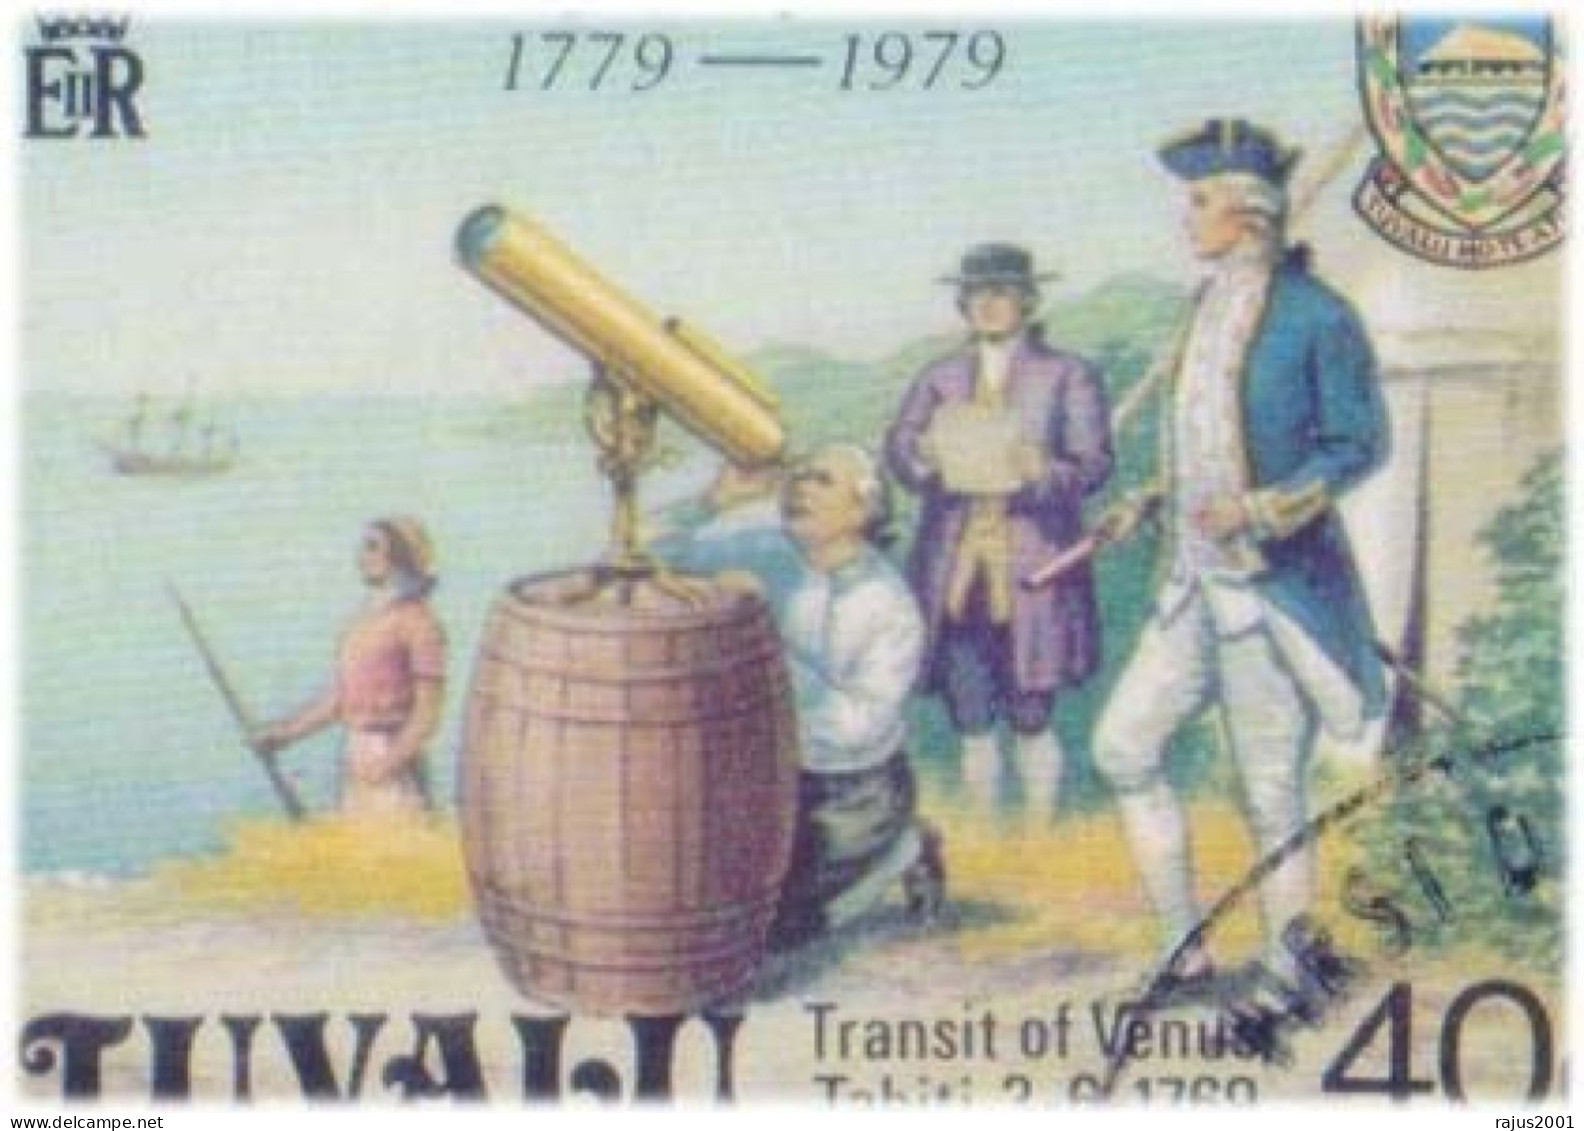 Captain James Cook, Captain's Resolution Ship, Explorer, Navigator, Cartographer, Map, Telescope, Autograph Signed FDC - Explorers